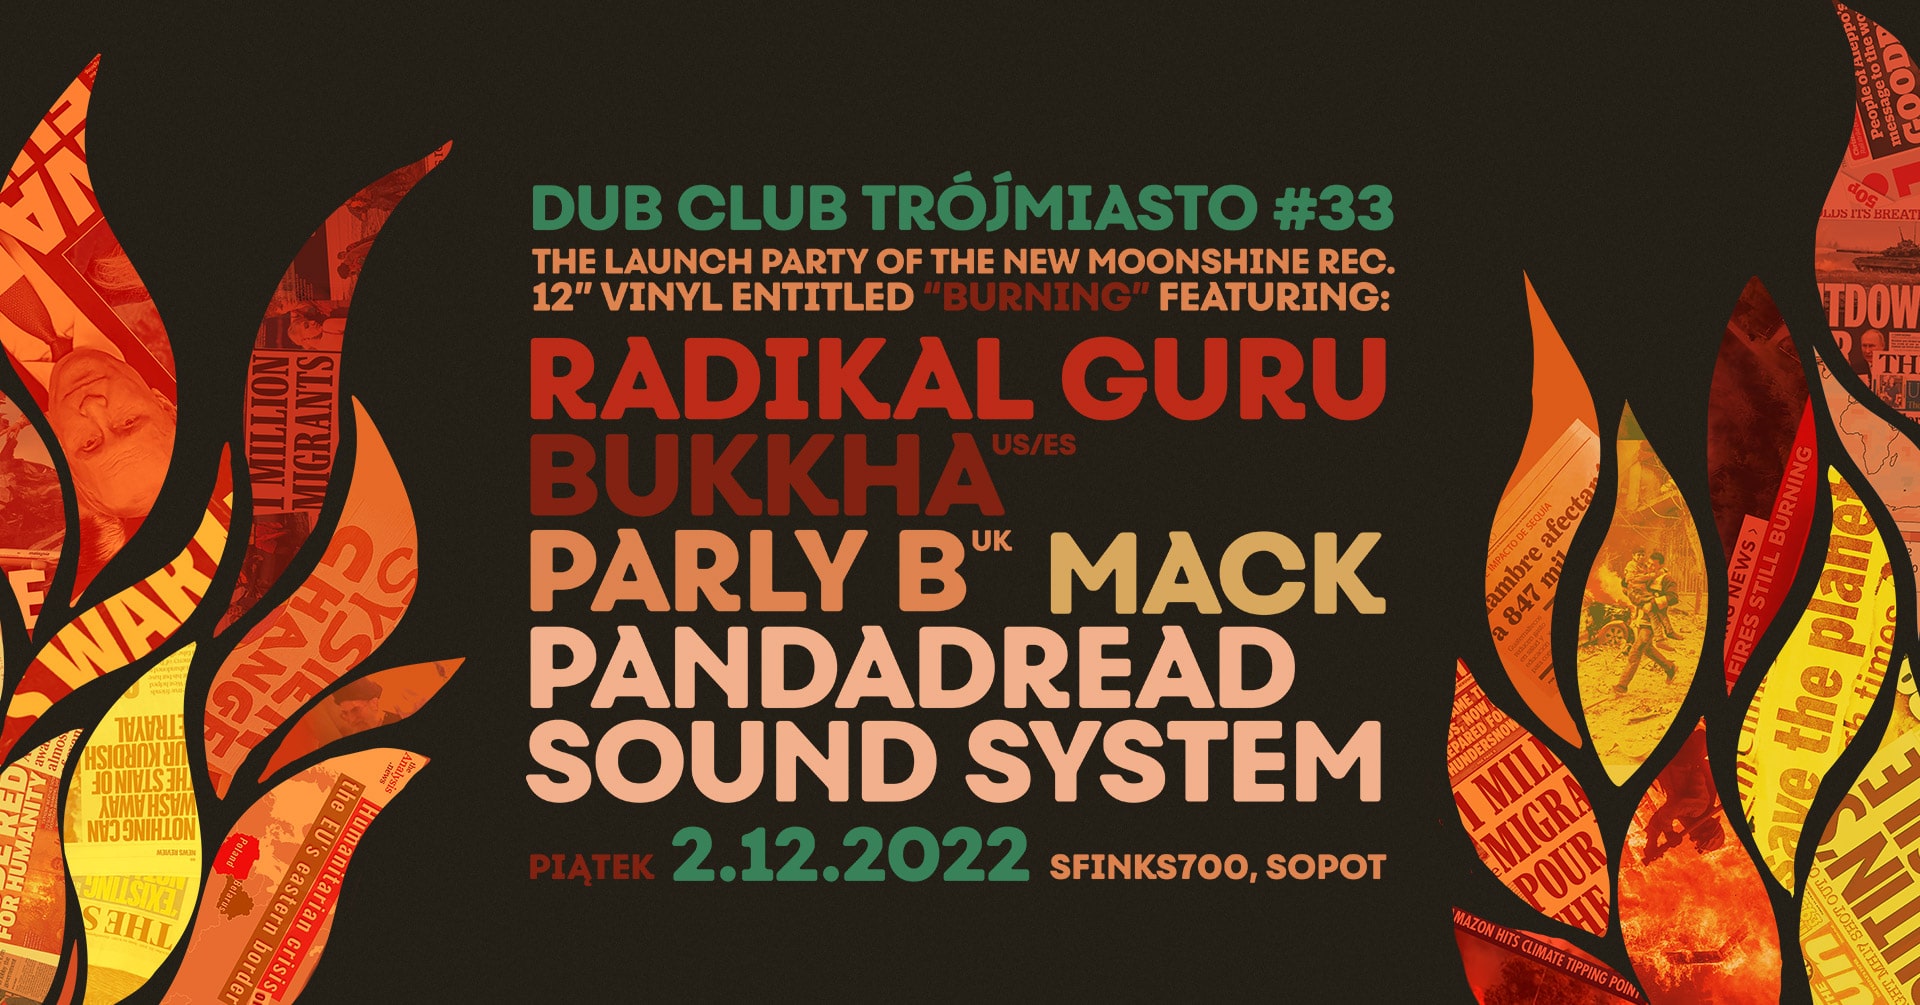 Dub Club Trójmiasto #33: Radikal Guru x Bukkha x Parly B x Pandadread x Mack @ Sopot